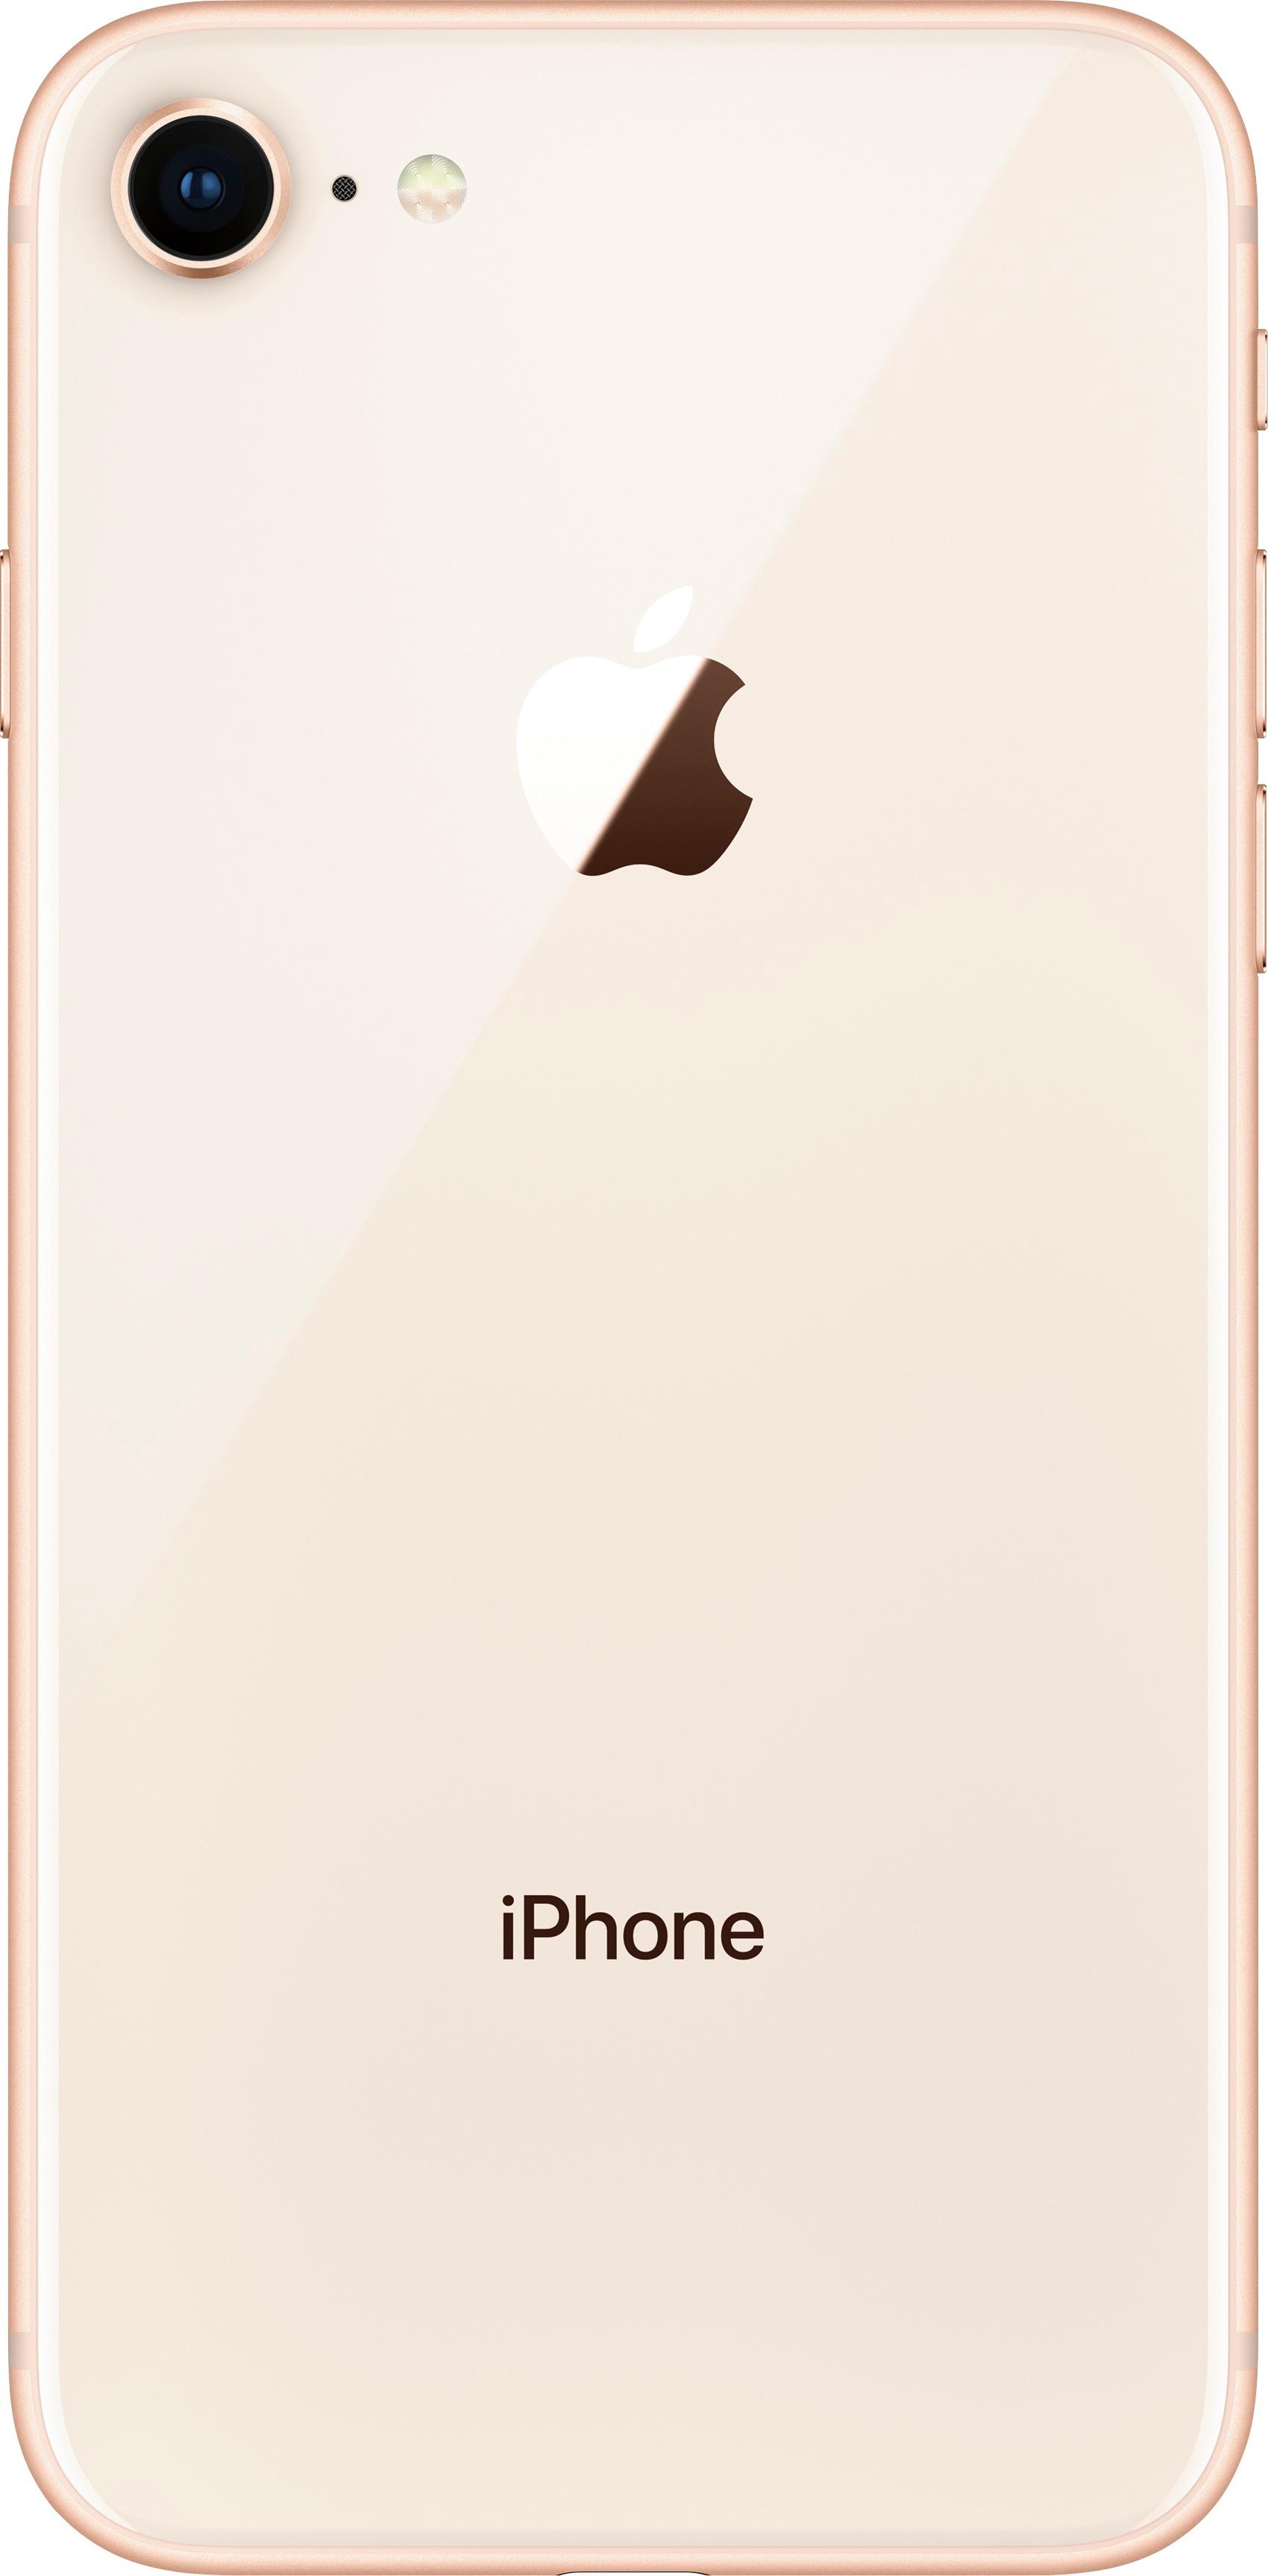 Apple iPhone 8 256GB Gold (Verizon) MQ7H2LL/A - Best Buy